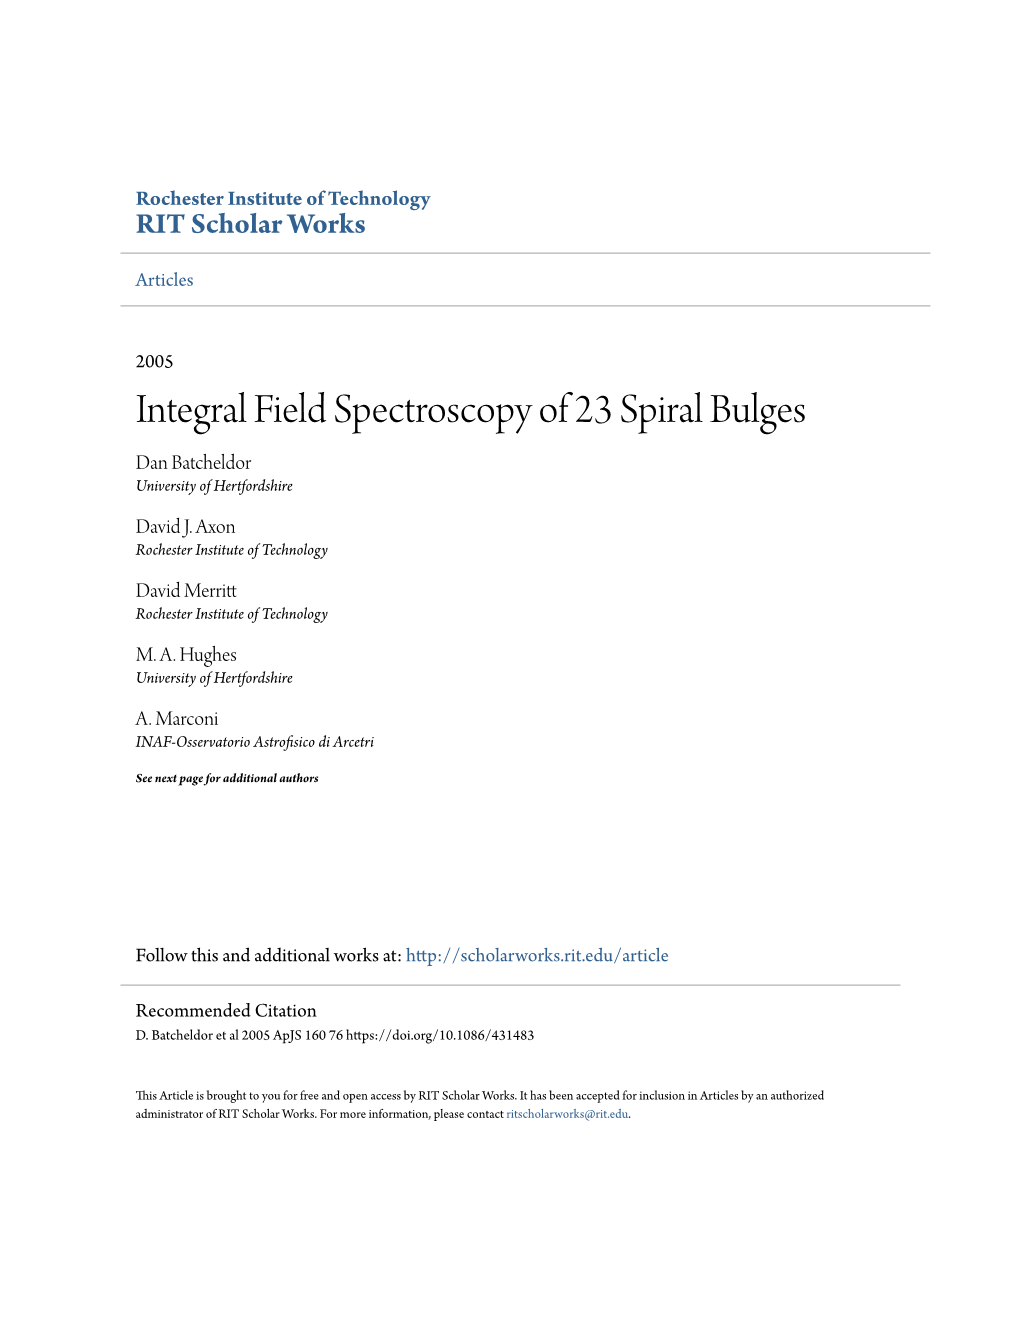 Integral Field Spectroscopy of 23 Spiral Bulges Dan Batcheldor University of Hertfordshire